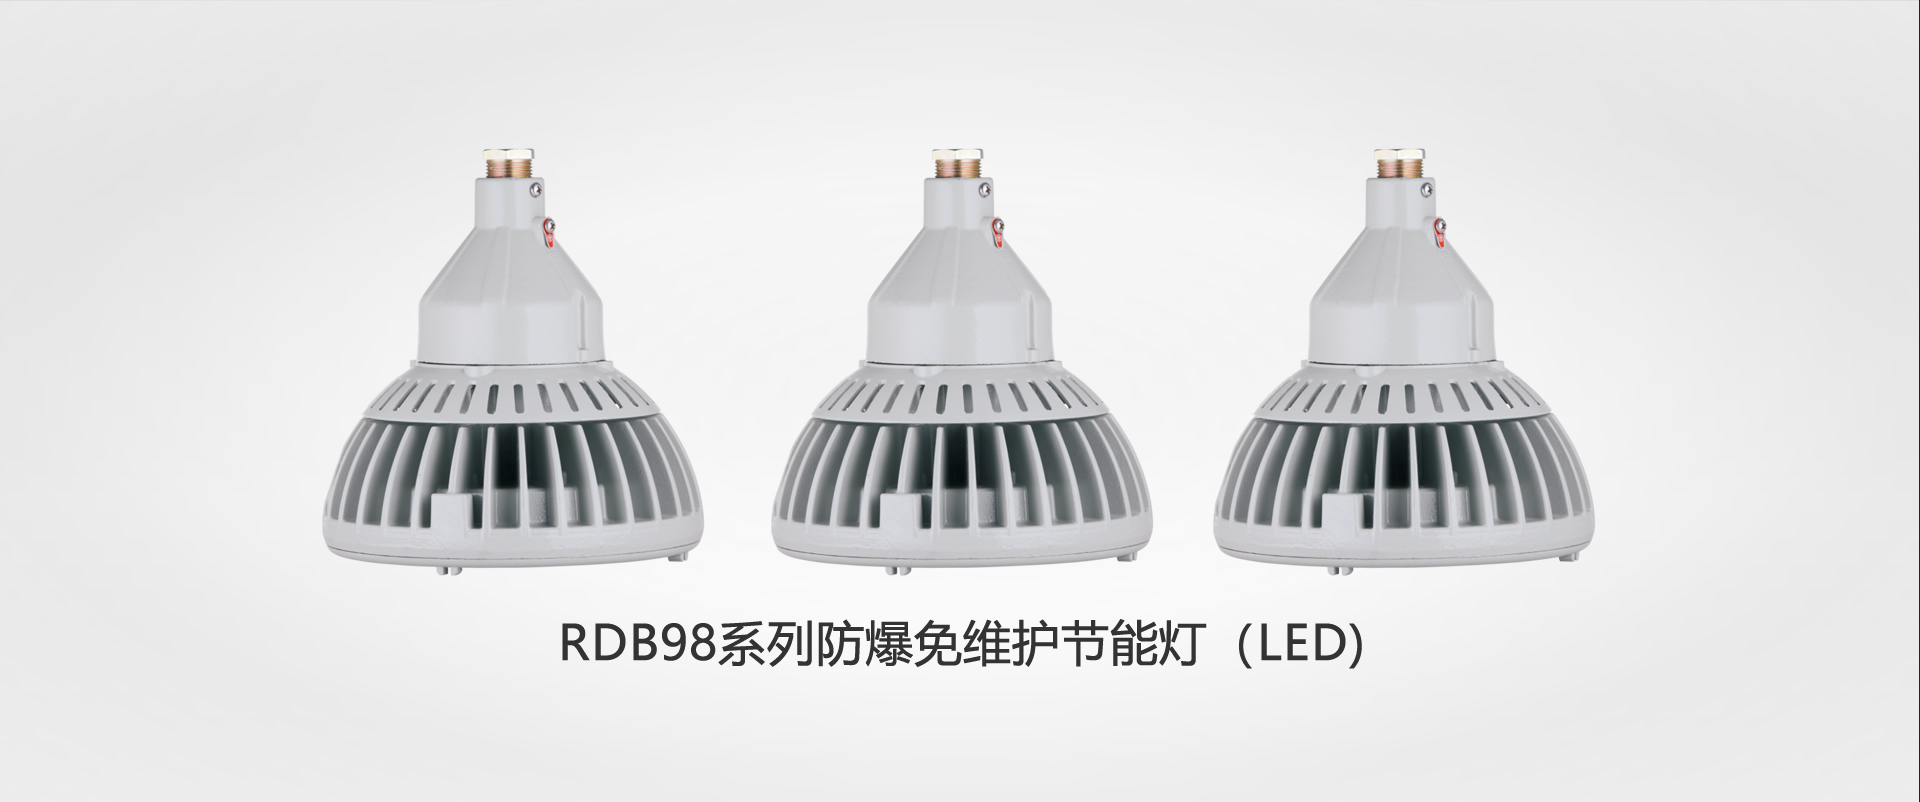 RDB98系列(lie)防爆(bao)免維護節能燈(deng)（LED)